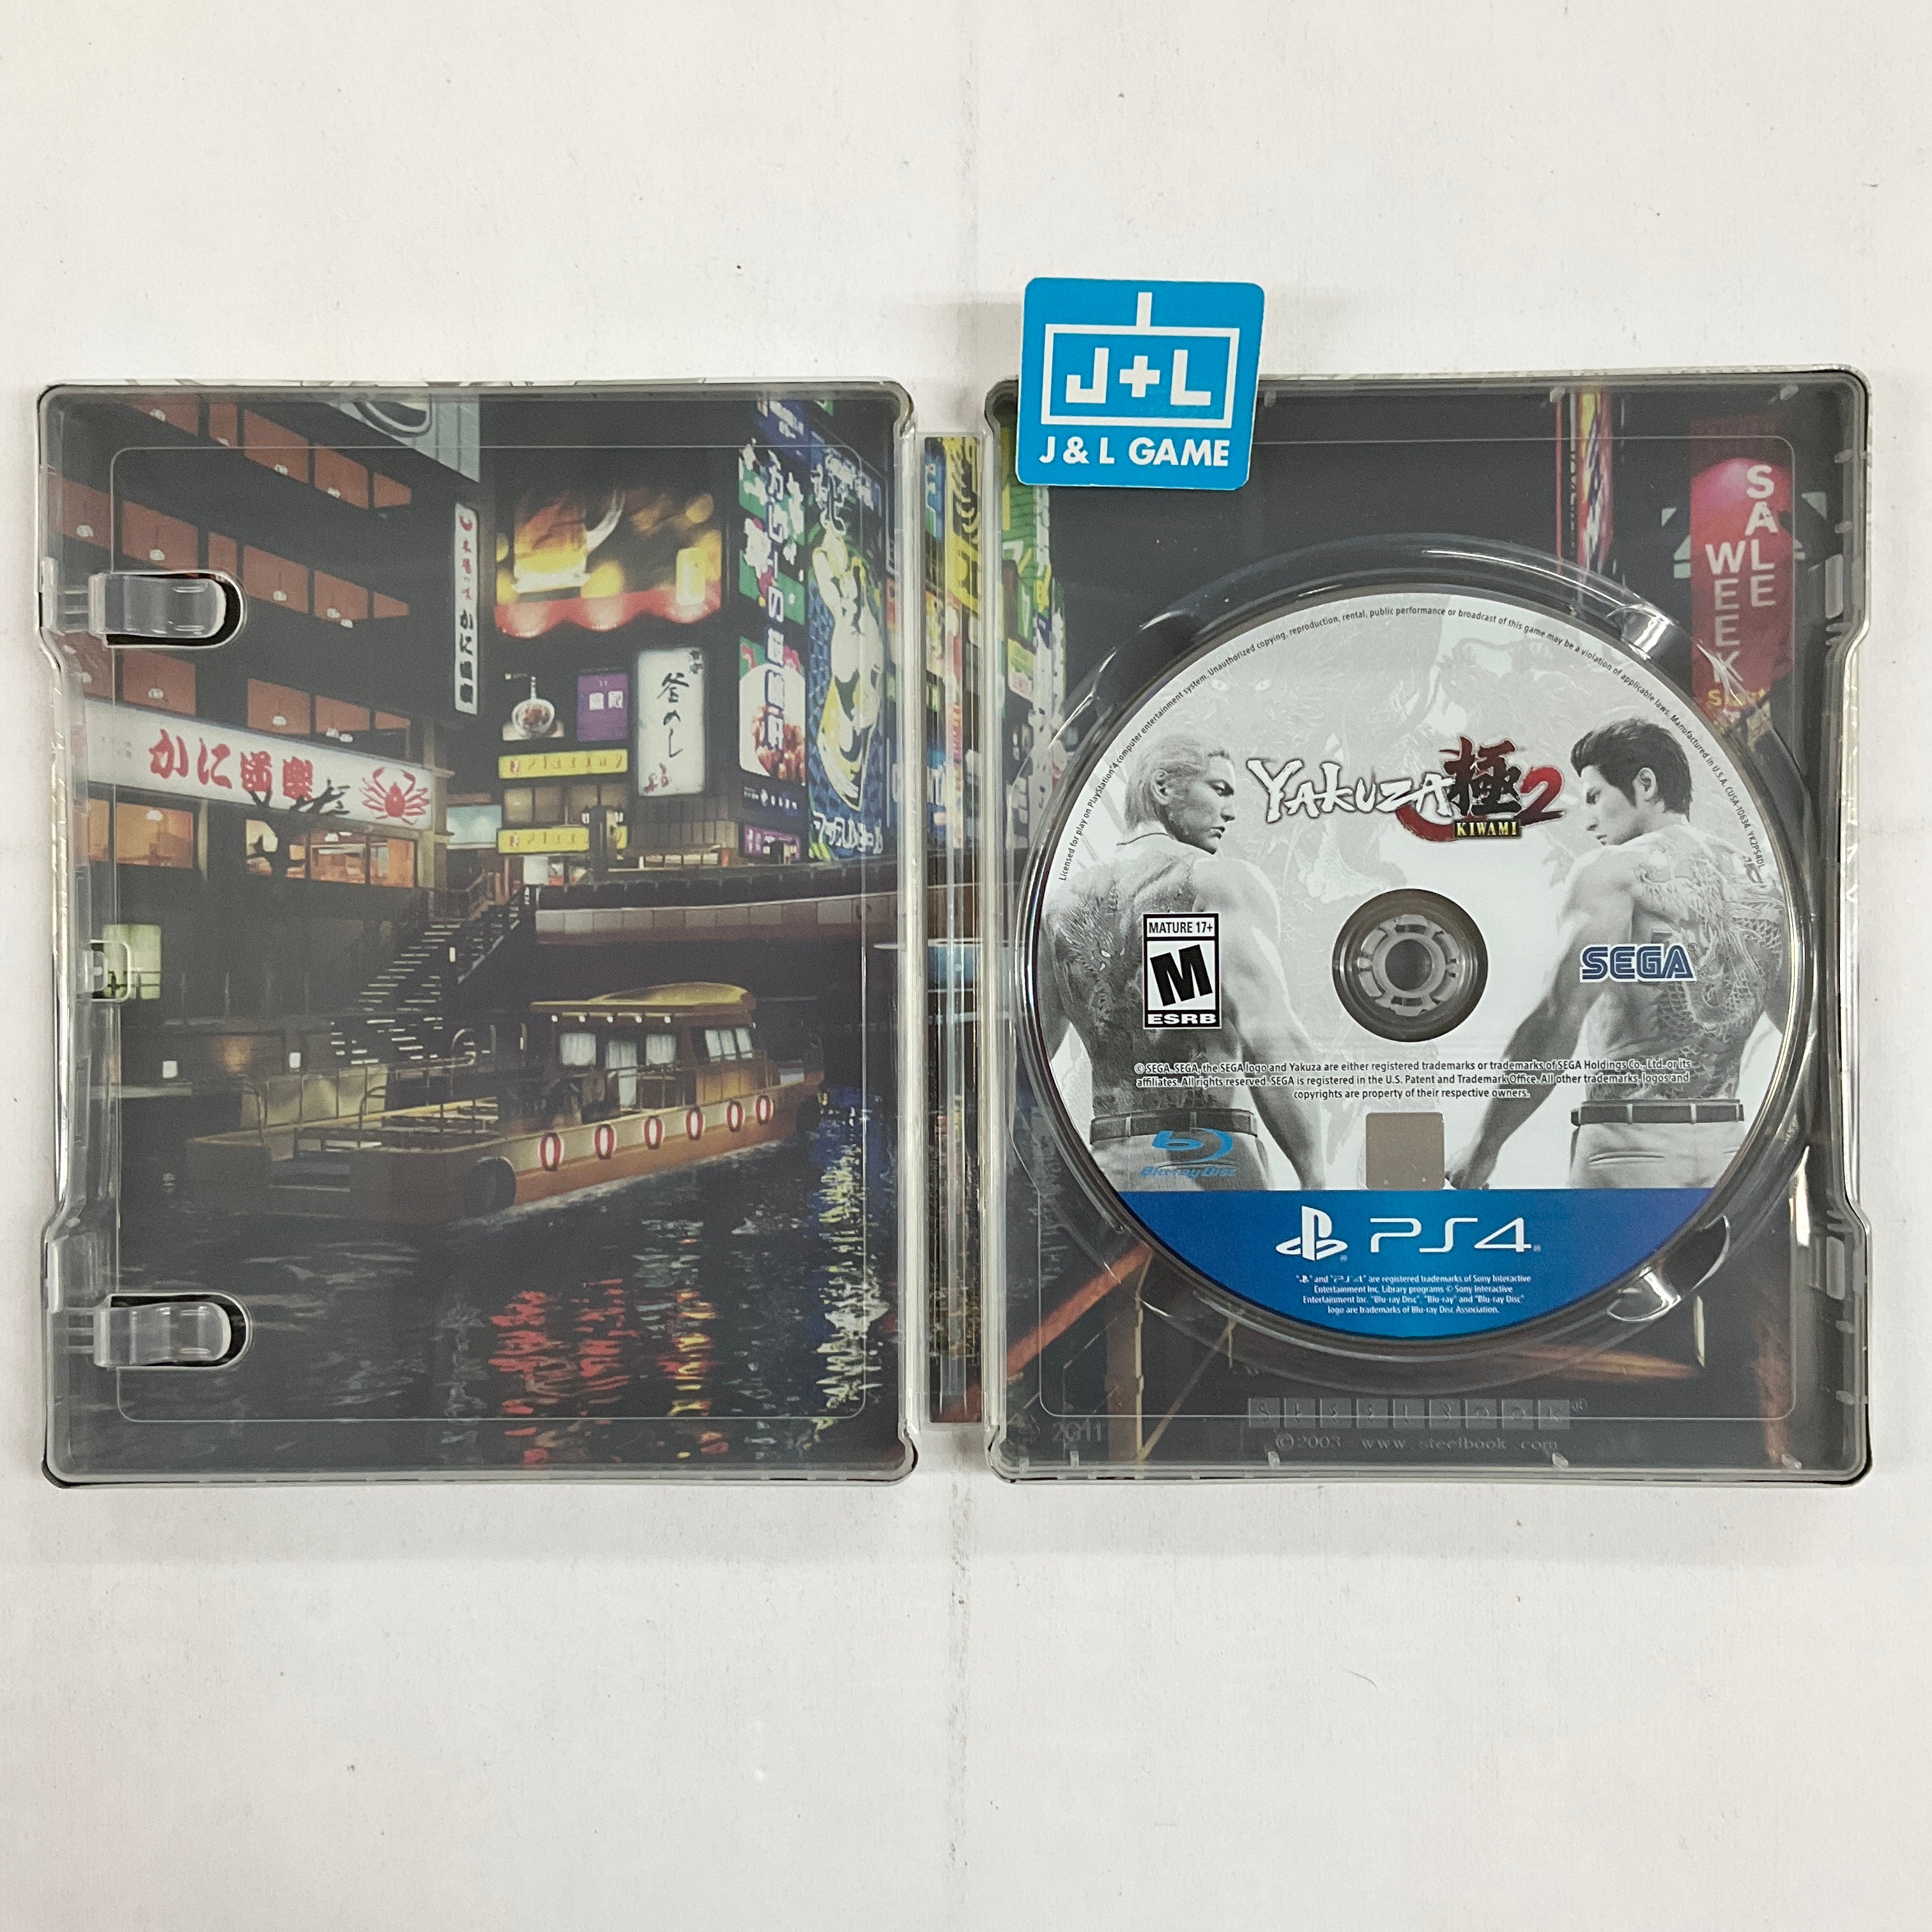 Yakuza Kiwami 2: SteelBook Edition - (PS4) PlayStation 4 [Pre-Owned] Video Games SEGA   